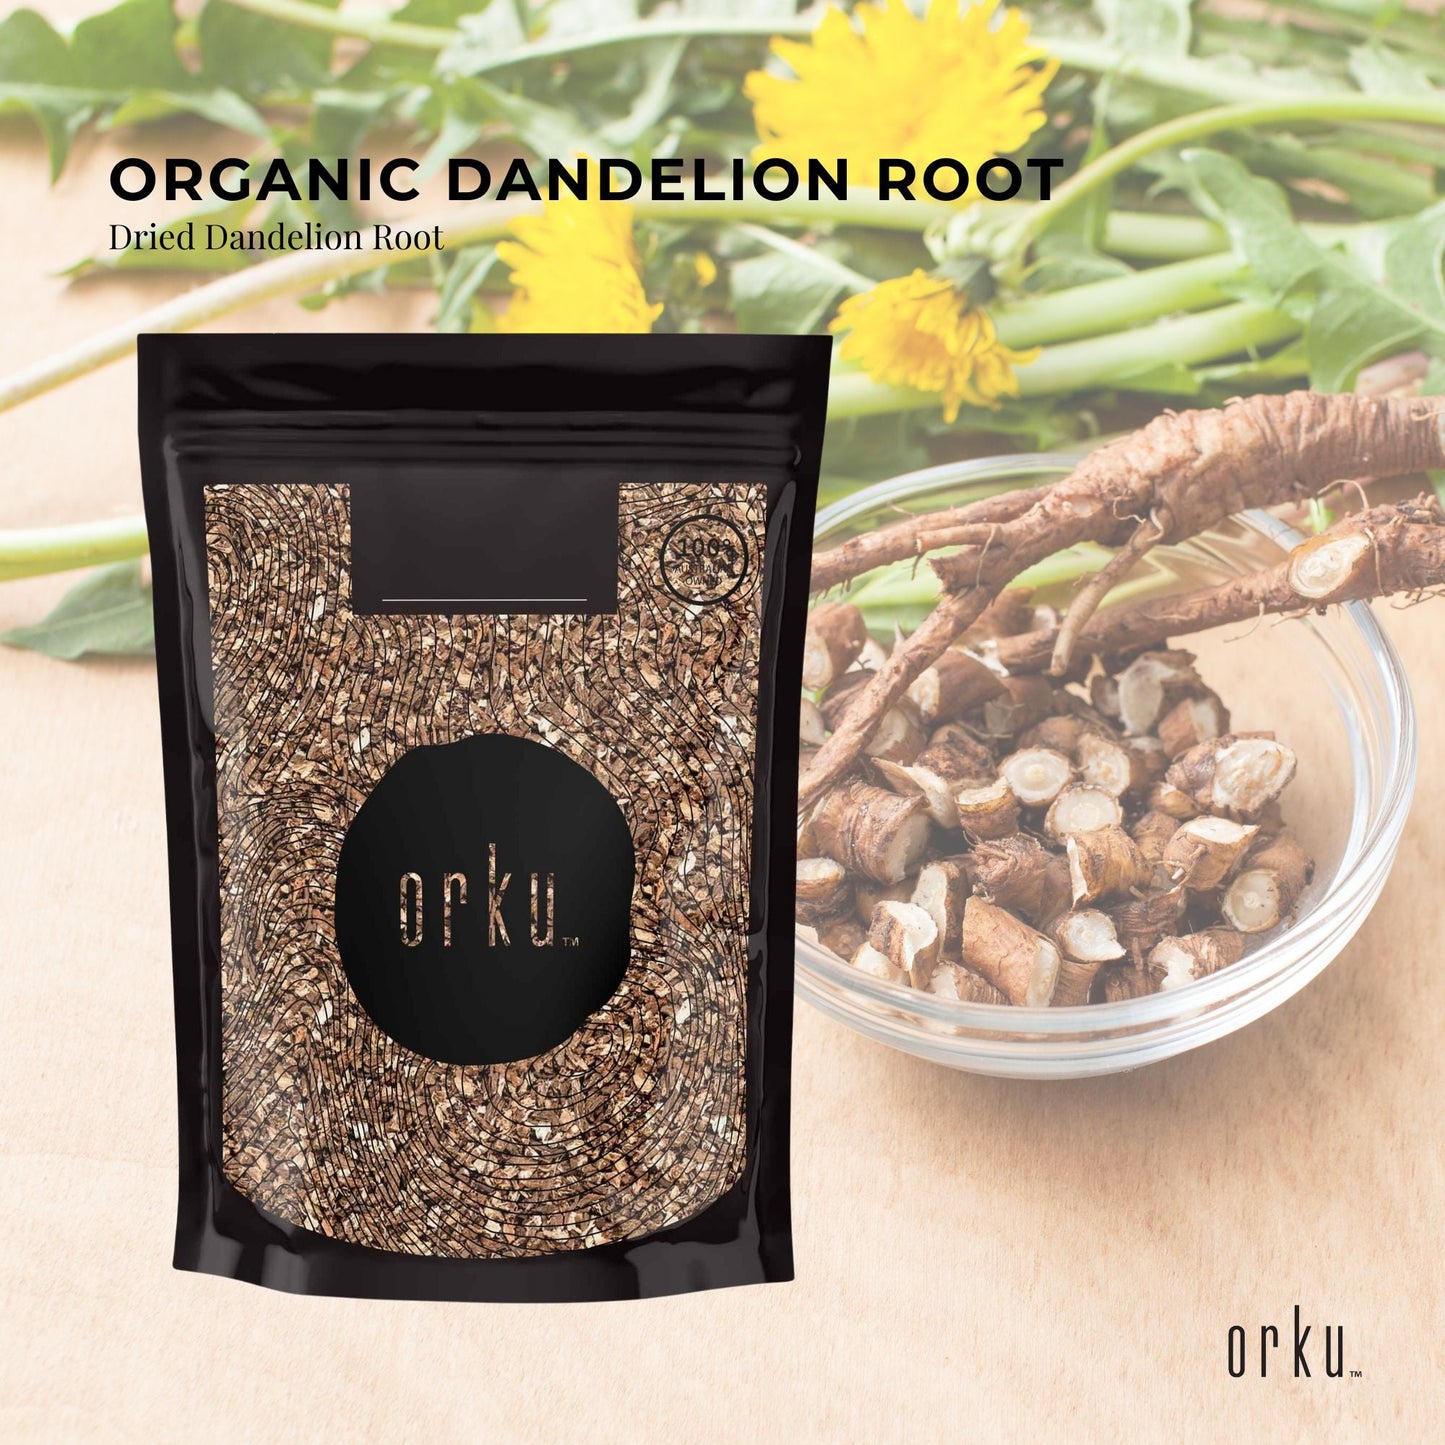 1Kg Organic Dandelion Root - Dried Raw Herbal Tea Supplement